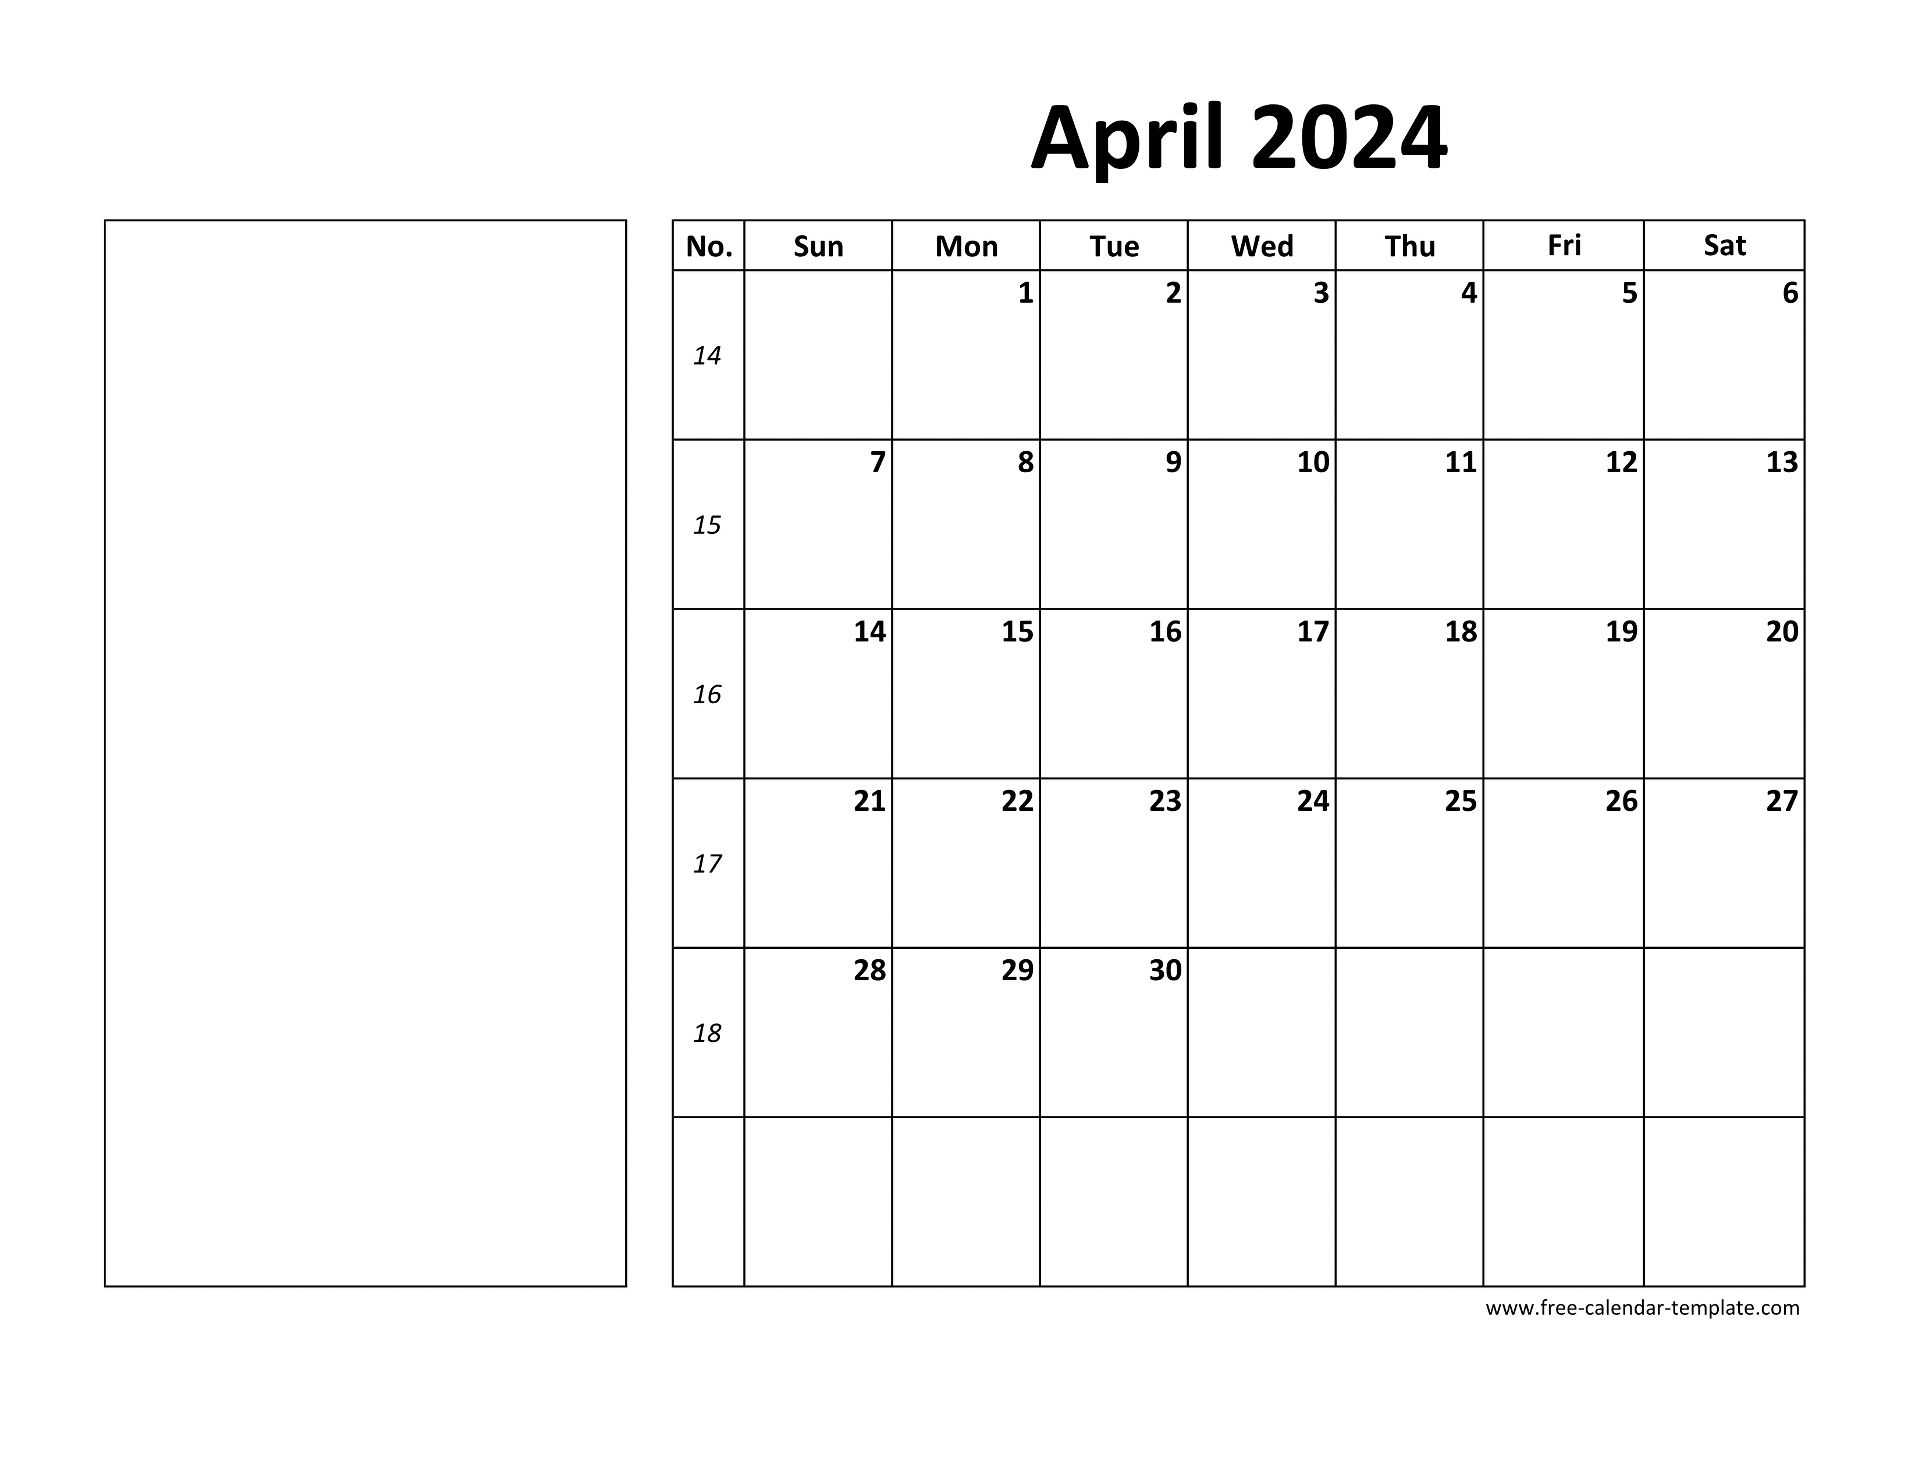 April 2024 Free Calendar Tempplate